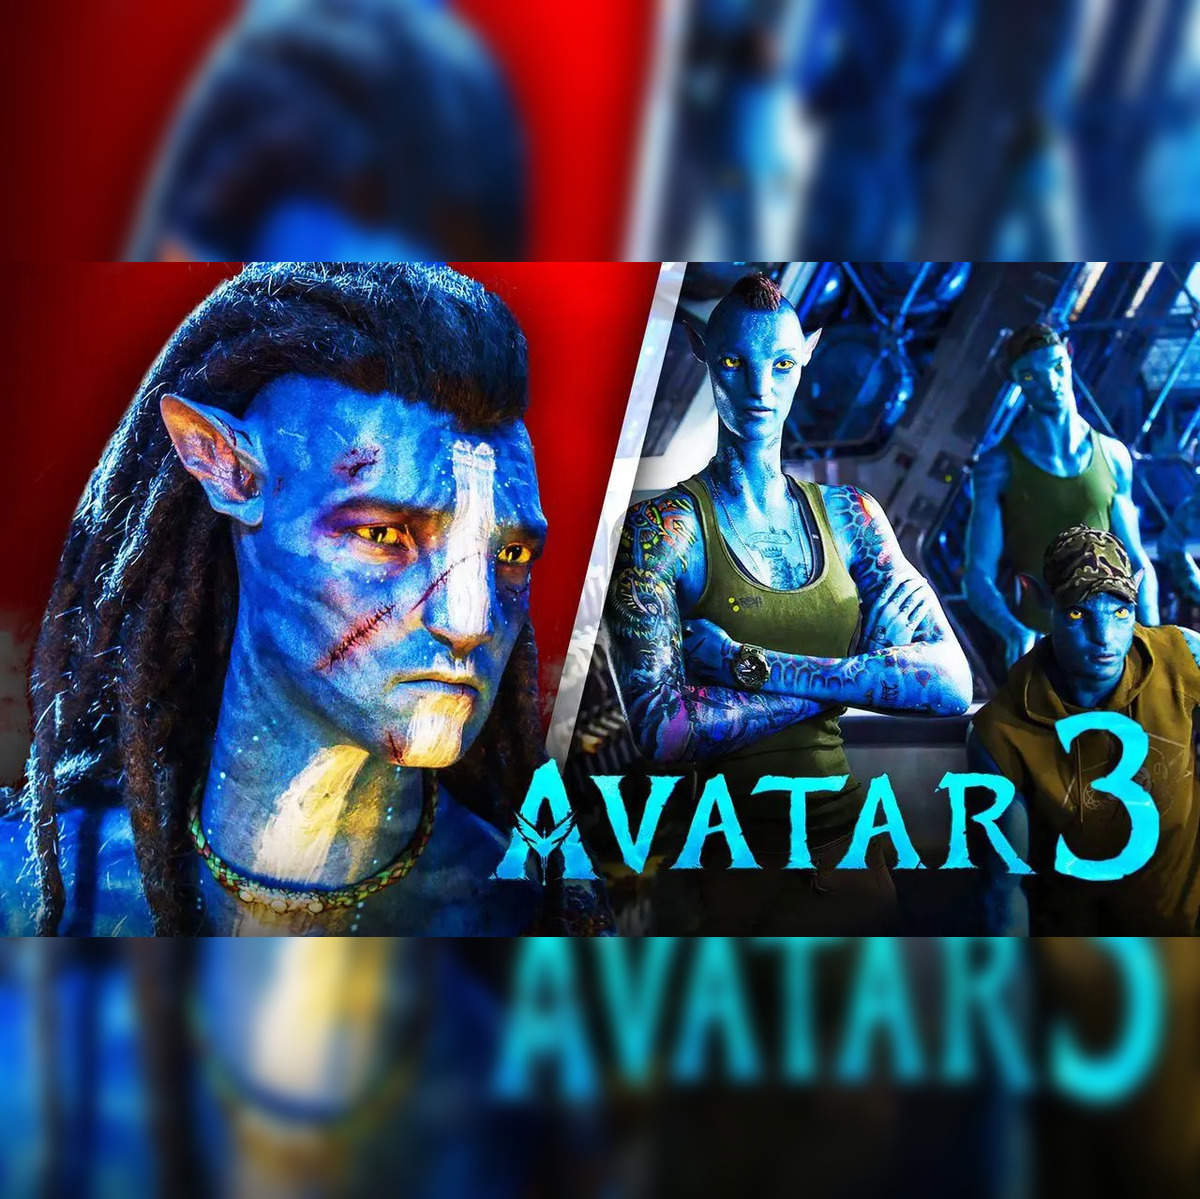 Avatar News